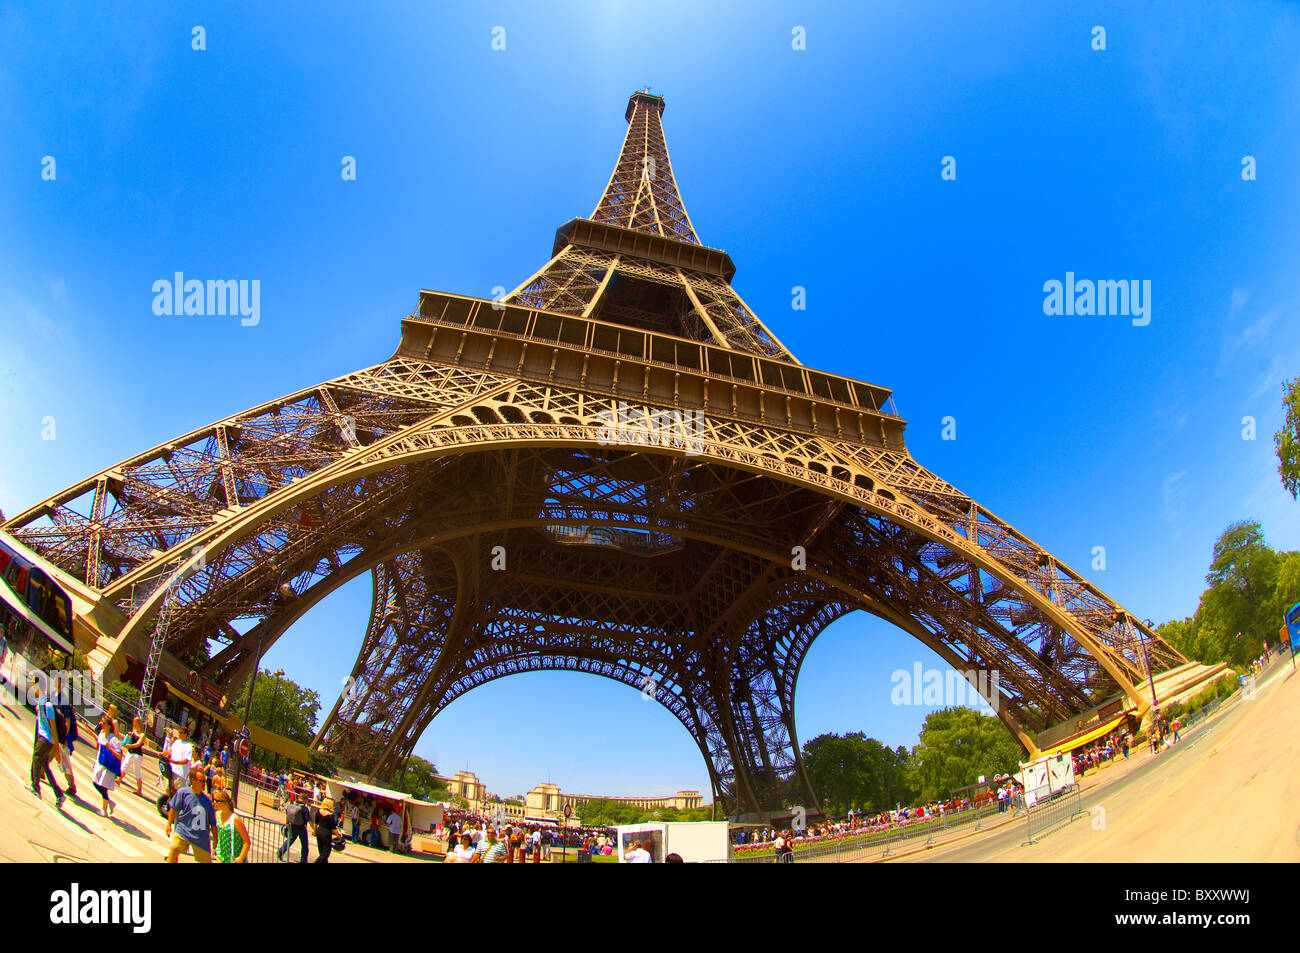 Paris - France -Eifel Tower - wide angle photo Stock Photo